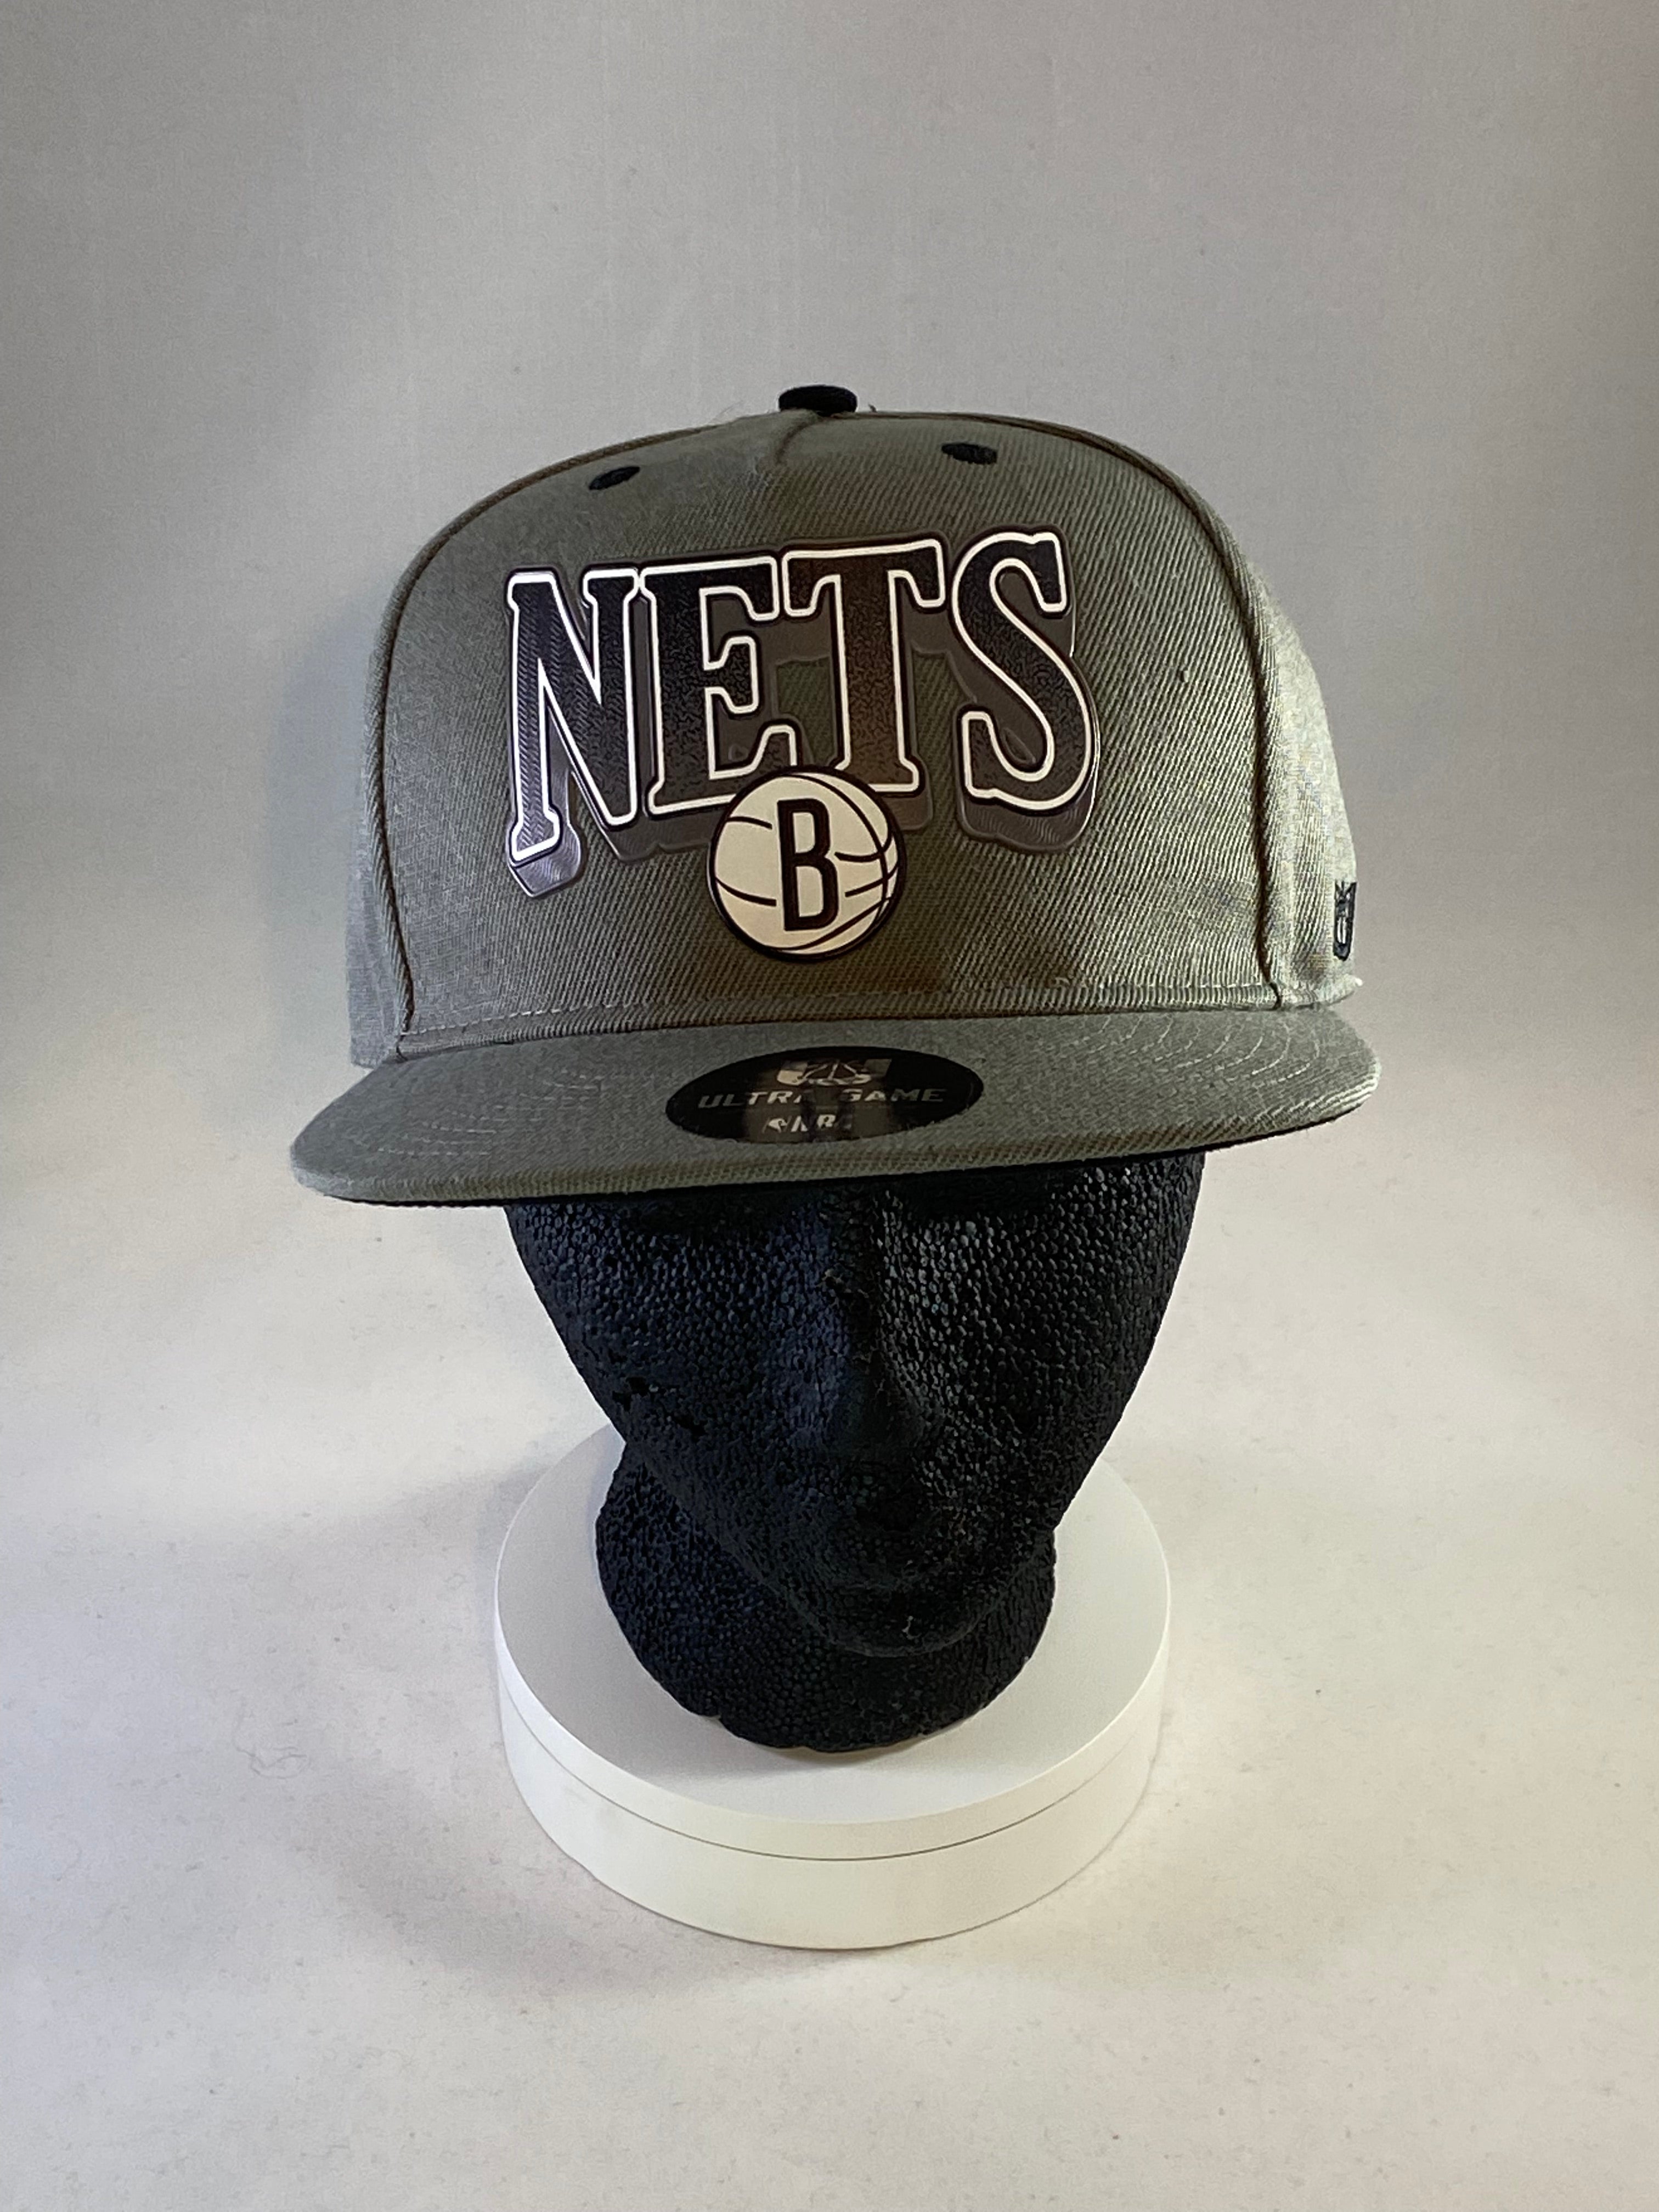 New Jersey Nets Logo Athletic NBA Vintage Wool Snapback Cap Hat